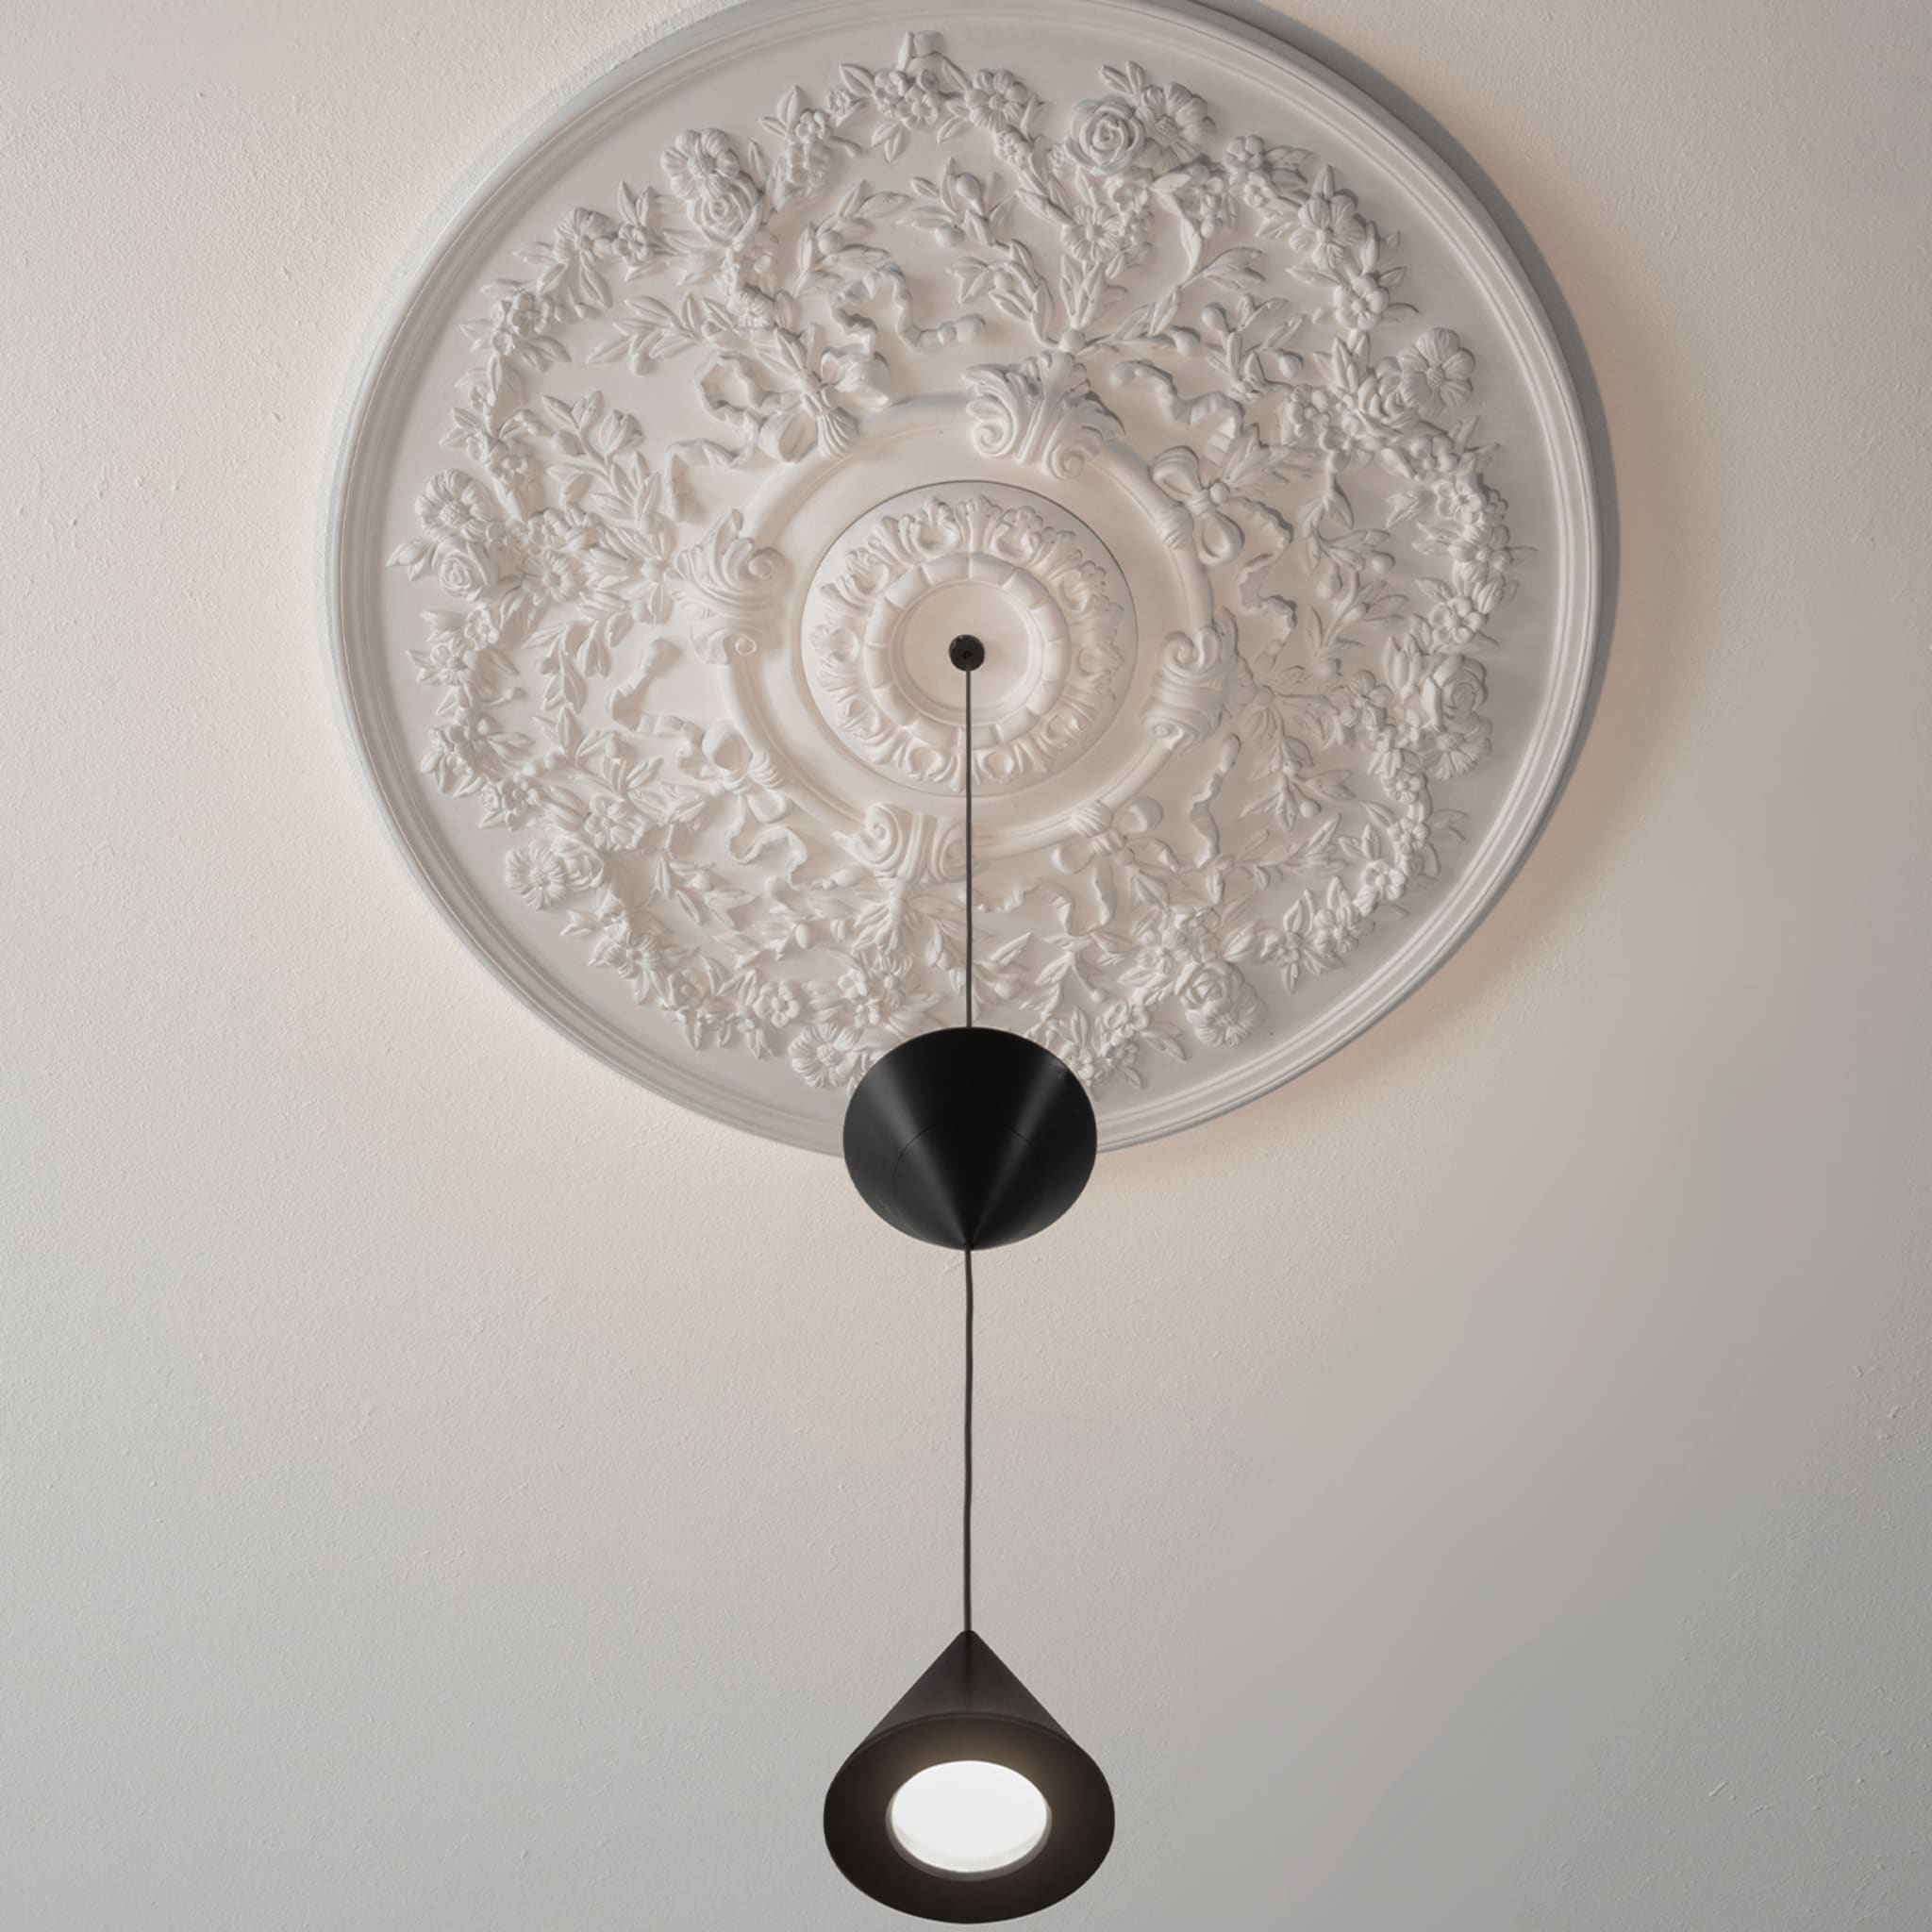 Moonbloom 2-Light Pendant Lamp by Matteo Ugolini - Alternative view 2